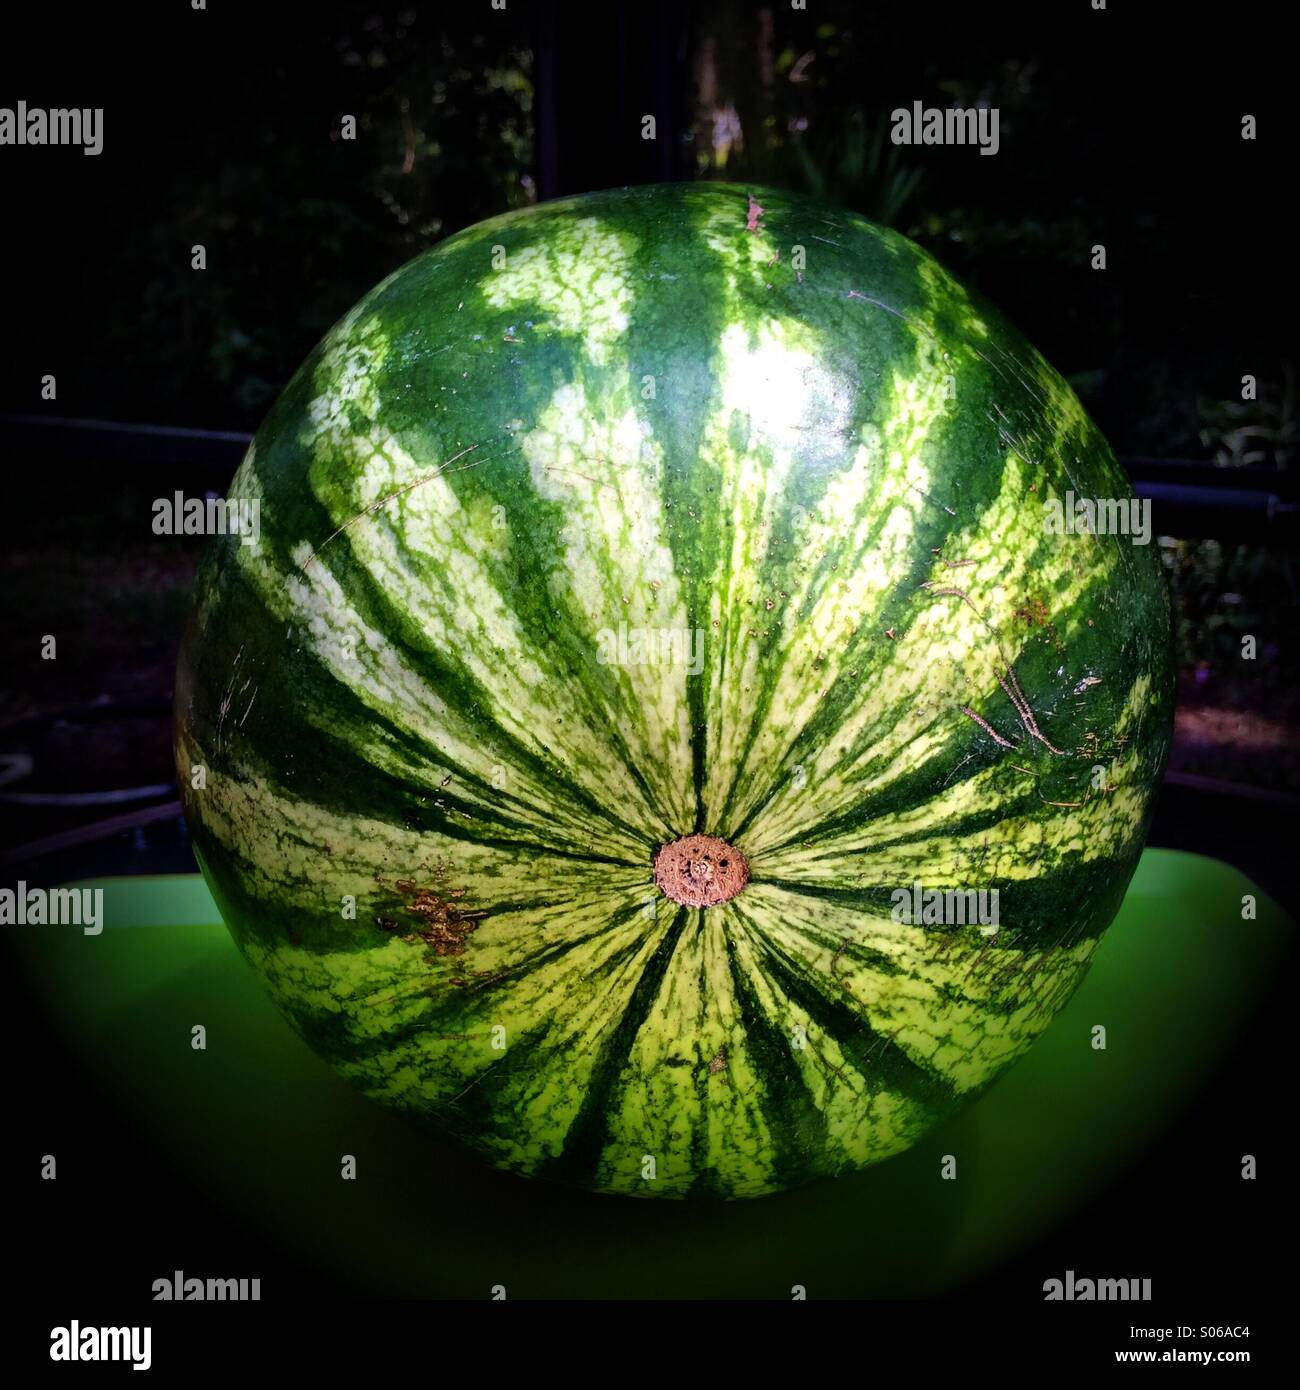 A watermelon. Stock Photo